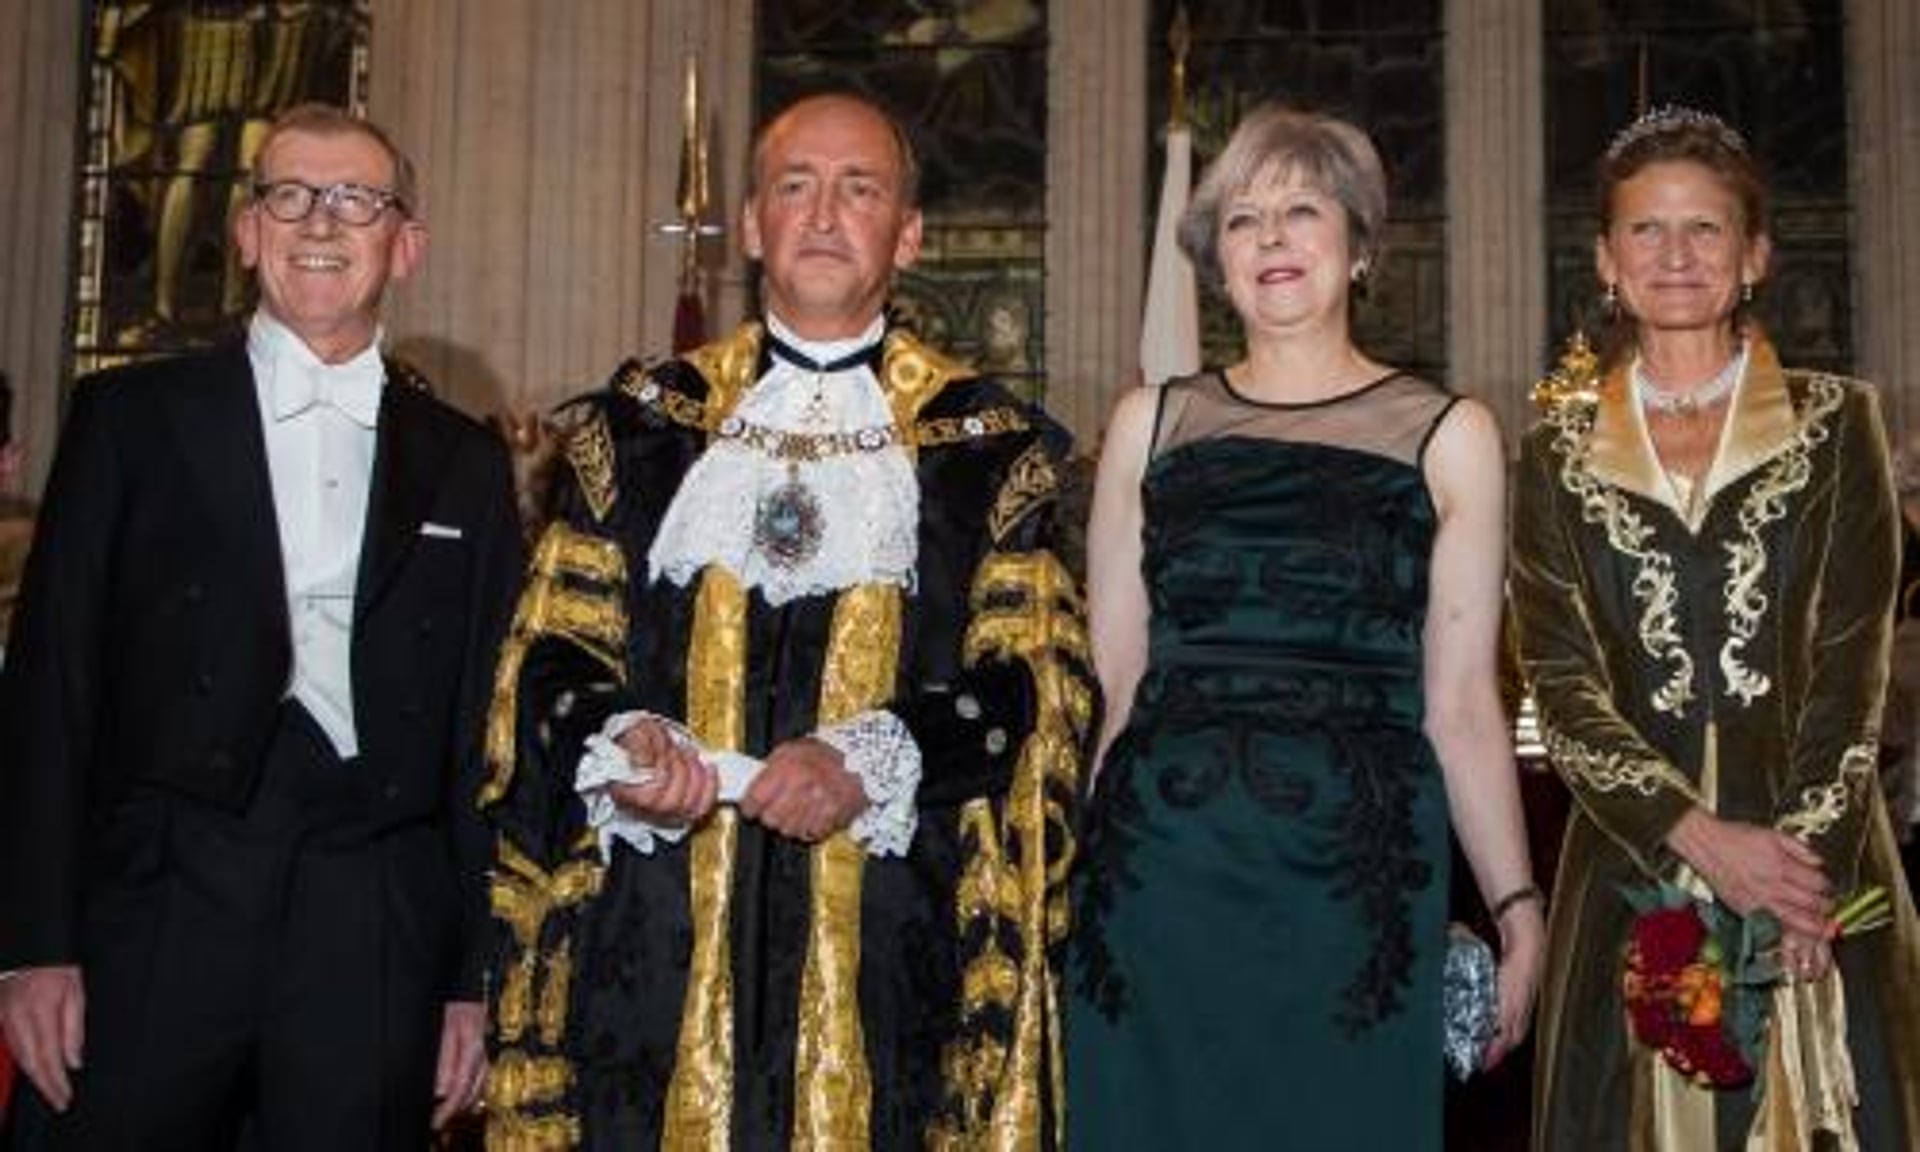 Bildergebnis für Lord Mayor's banquet 2017 Theresa May accuses Russia